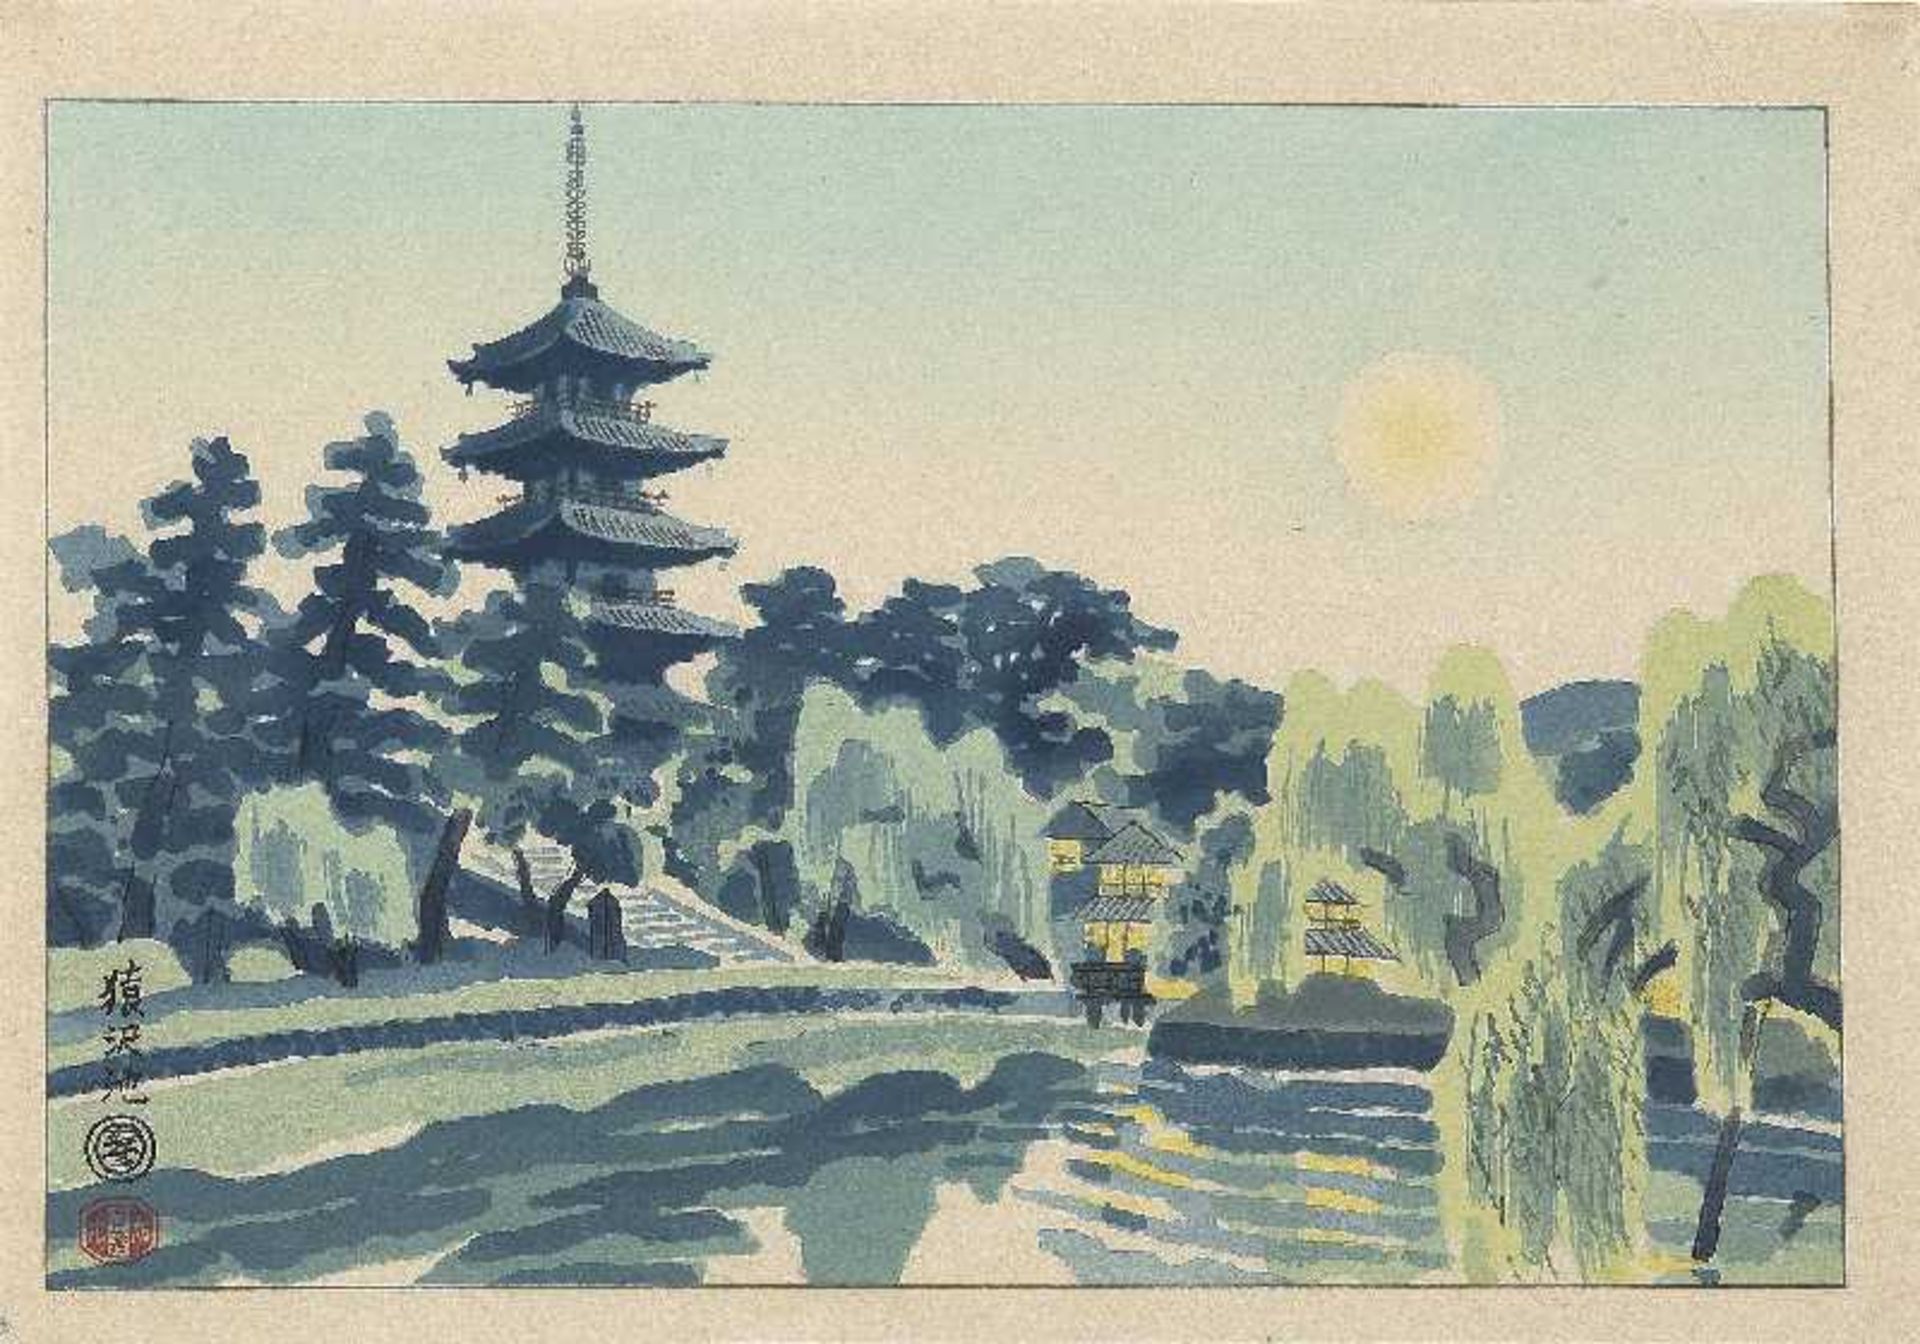 KOTOZUKA EIICHI (1906 - 1979) Original-Farbholzschnitt. Japan, 20th cent. Sarusawa-ike (Der